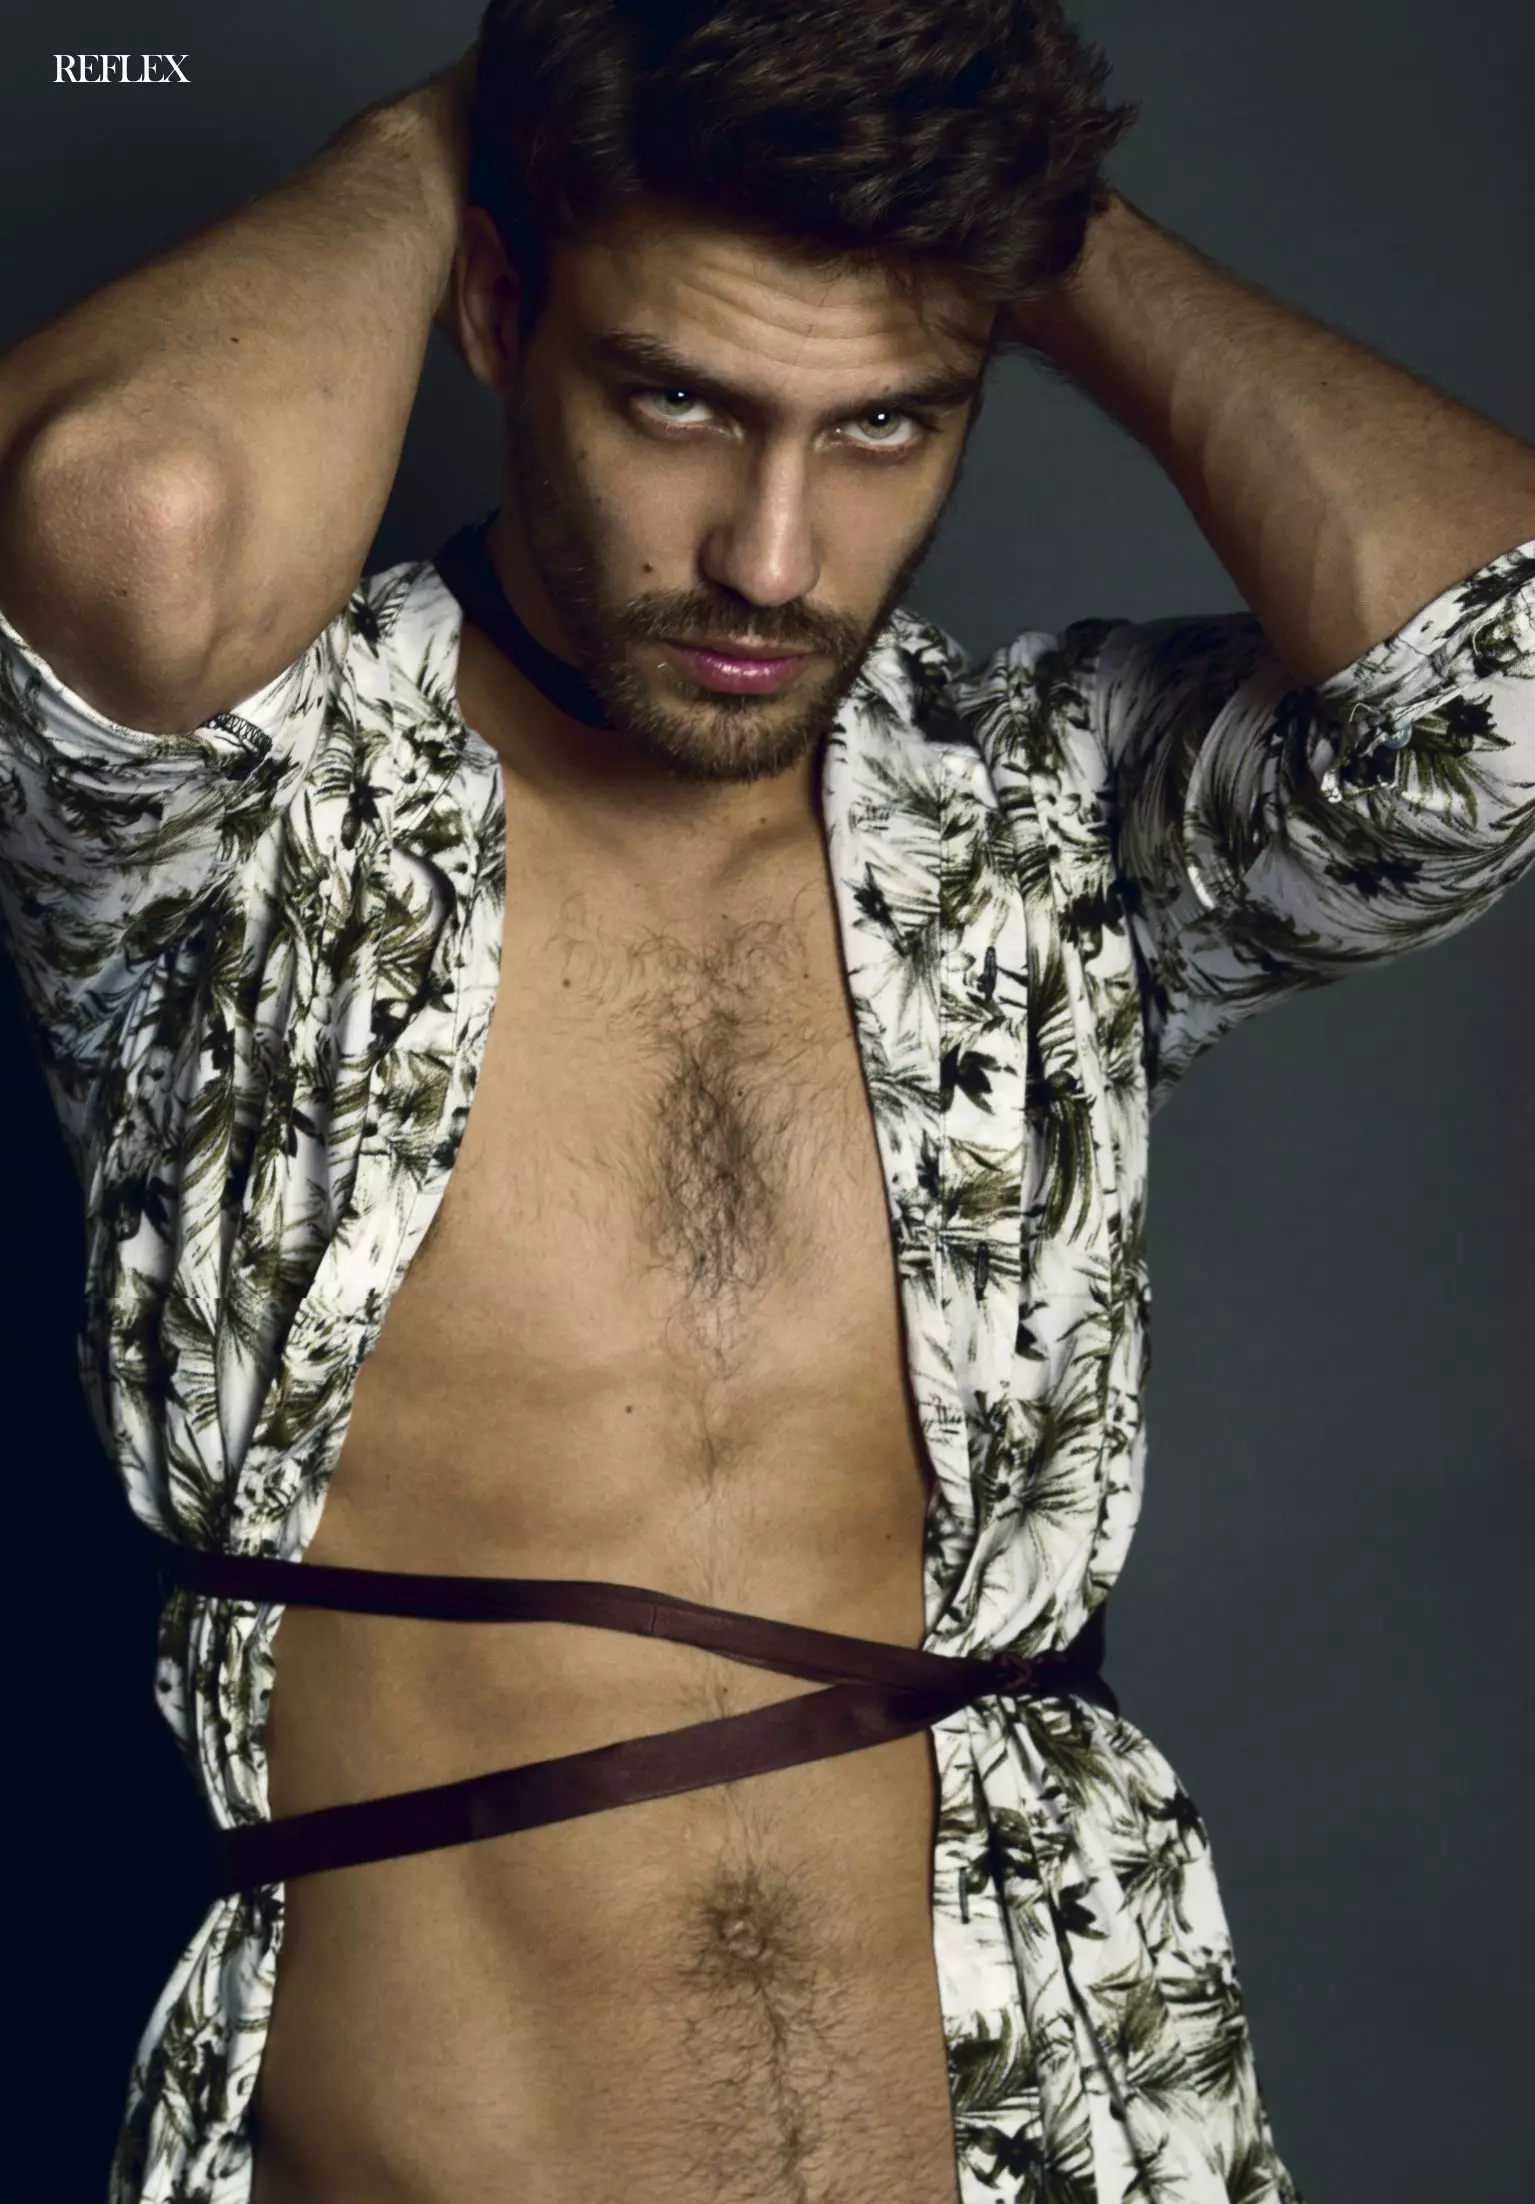 EP Bookers 演員兼模特 Juan Guilera 為 Reflex Homme 2015 年 4 月版的獨家拍攝擺姿勢，由 Ari Mendes 拍攝，Mahatma D.